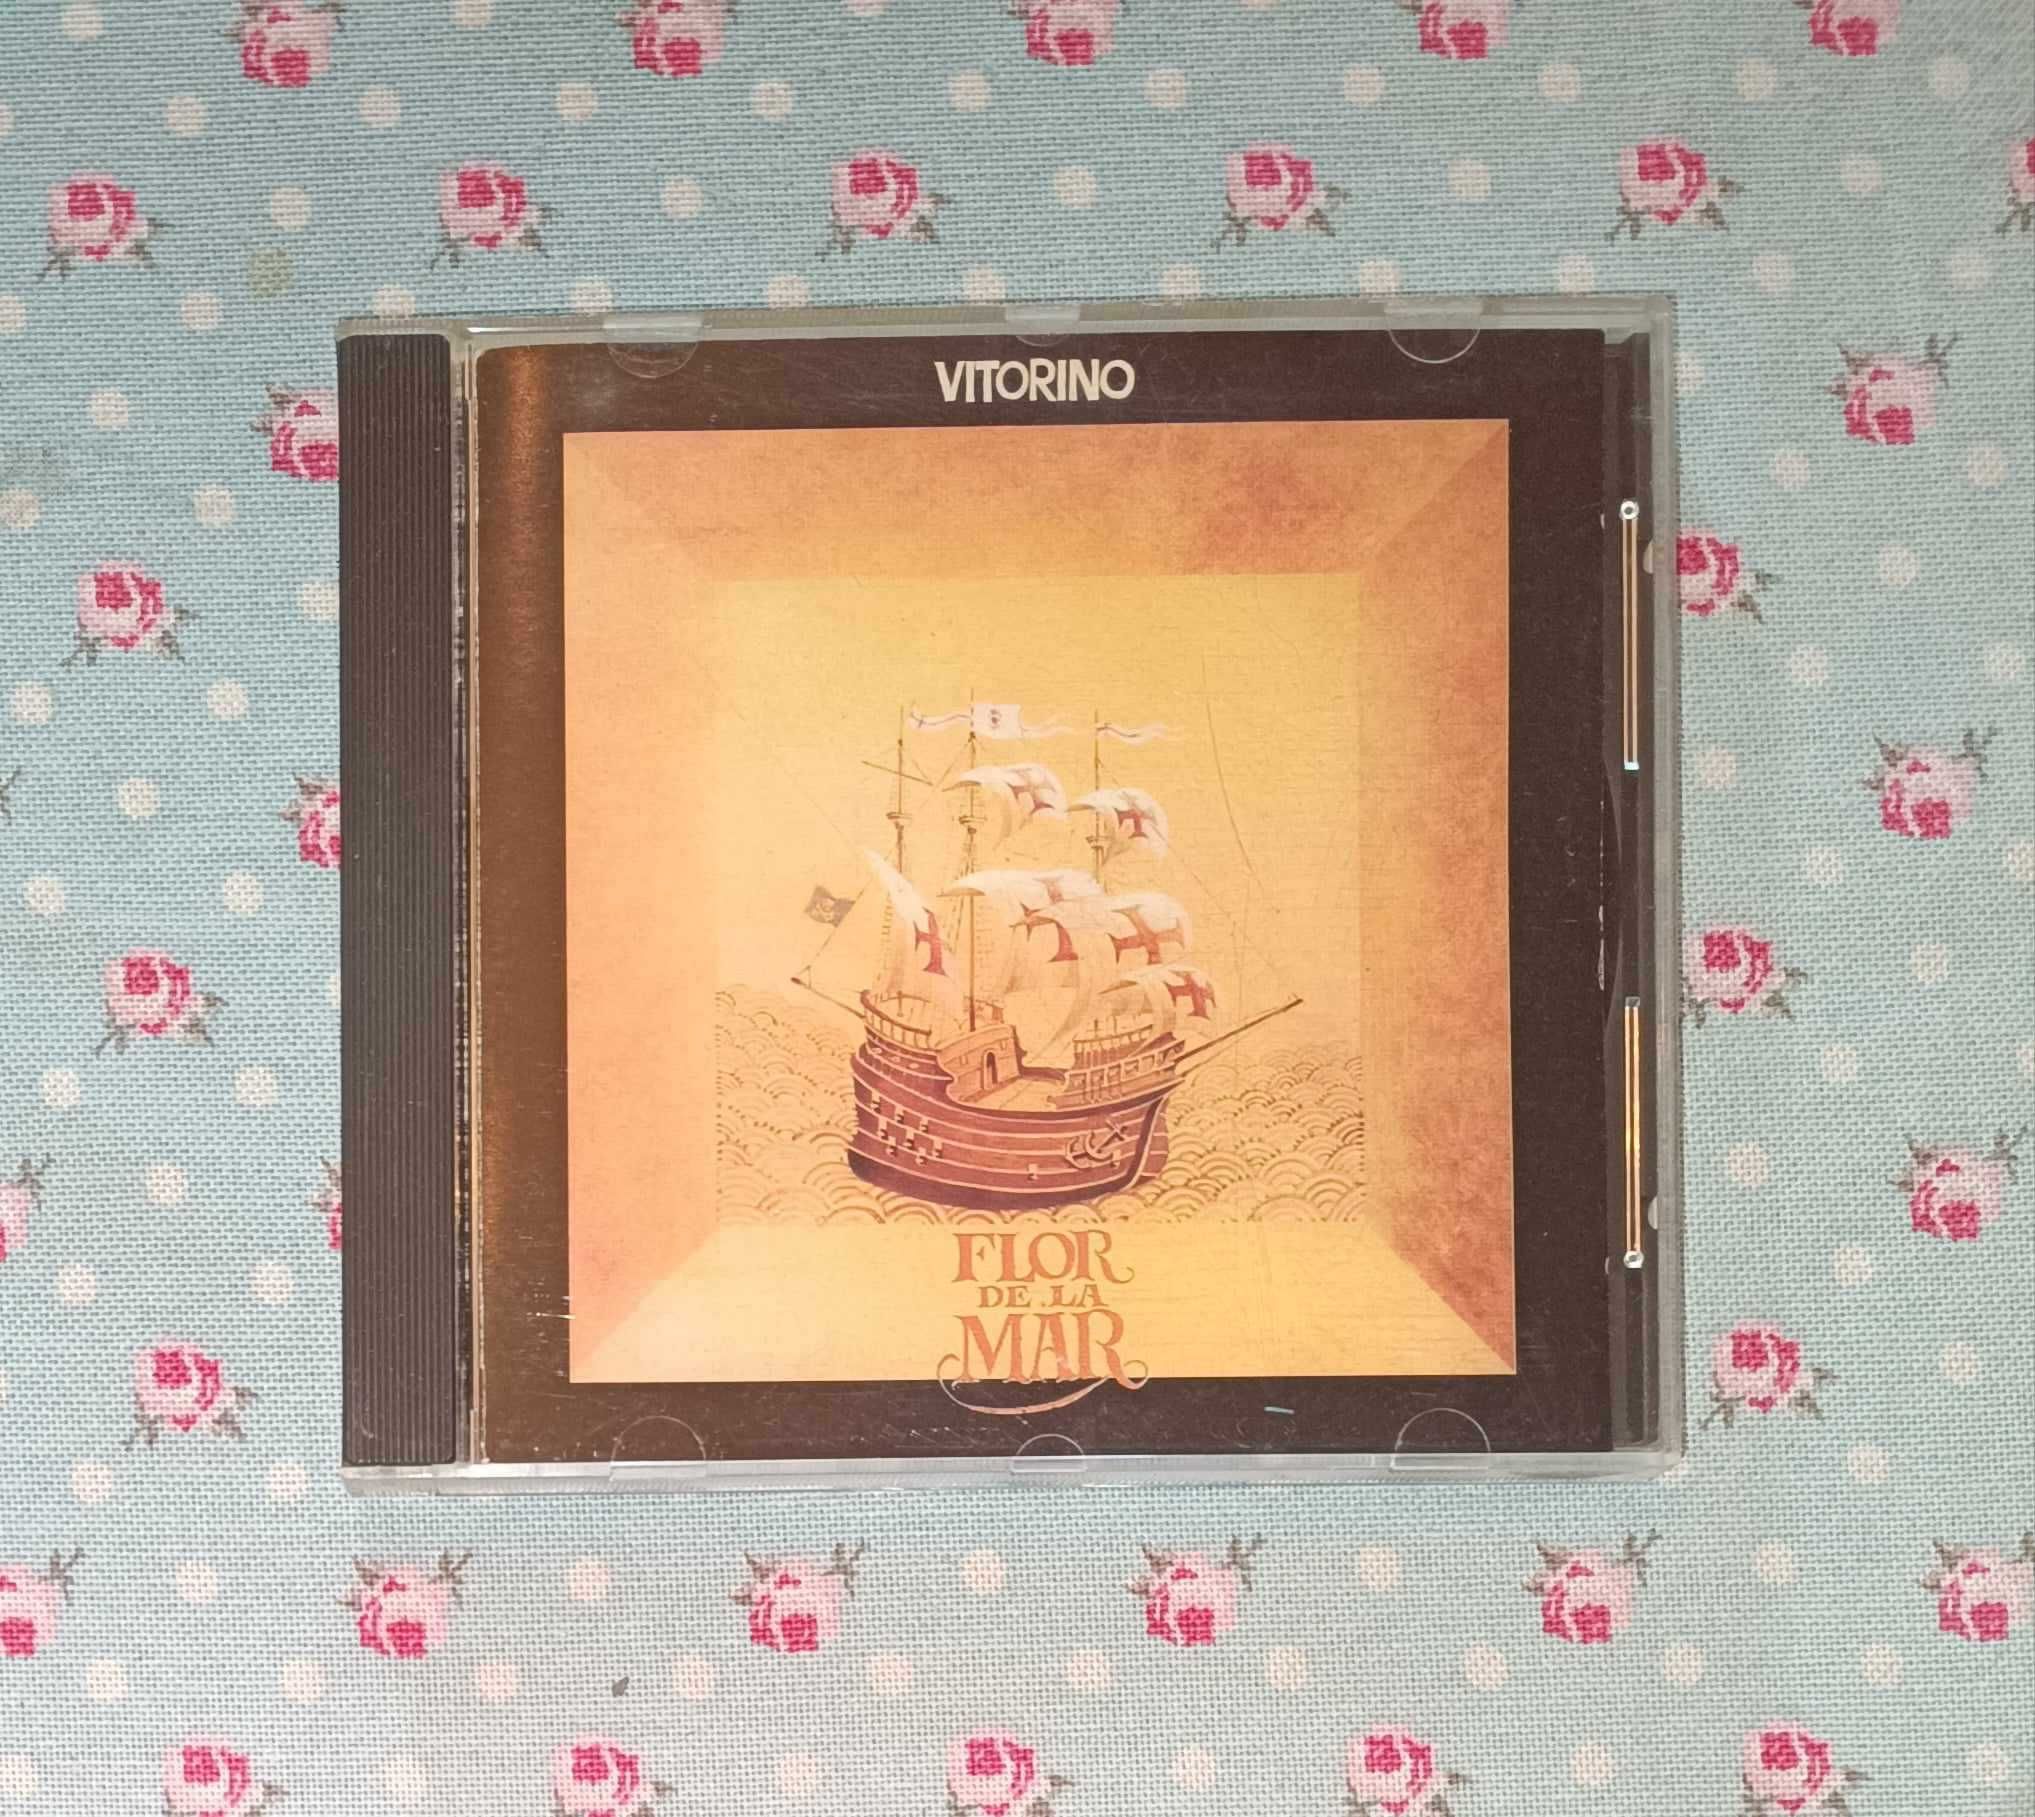 8 CDs do Vitorino